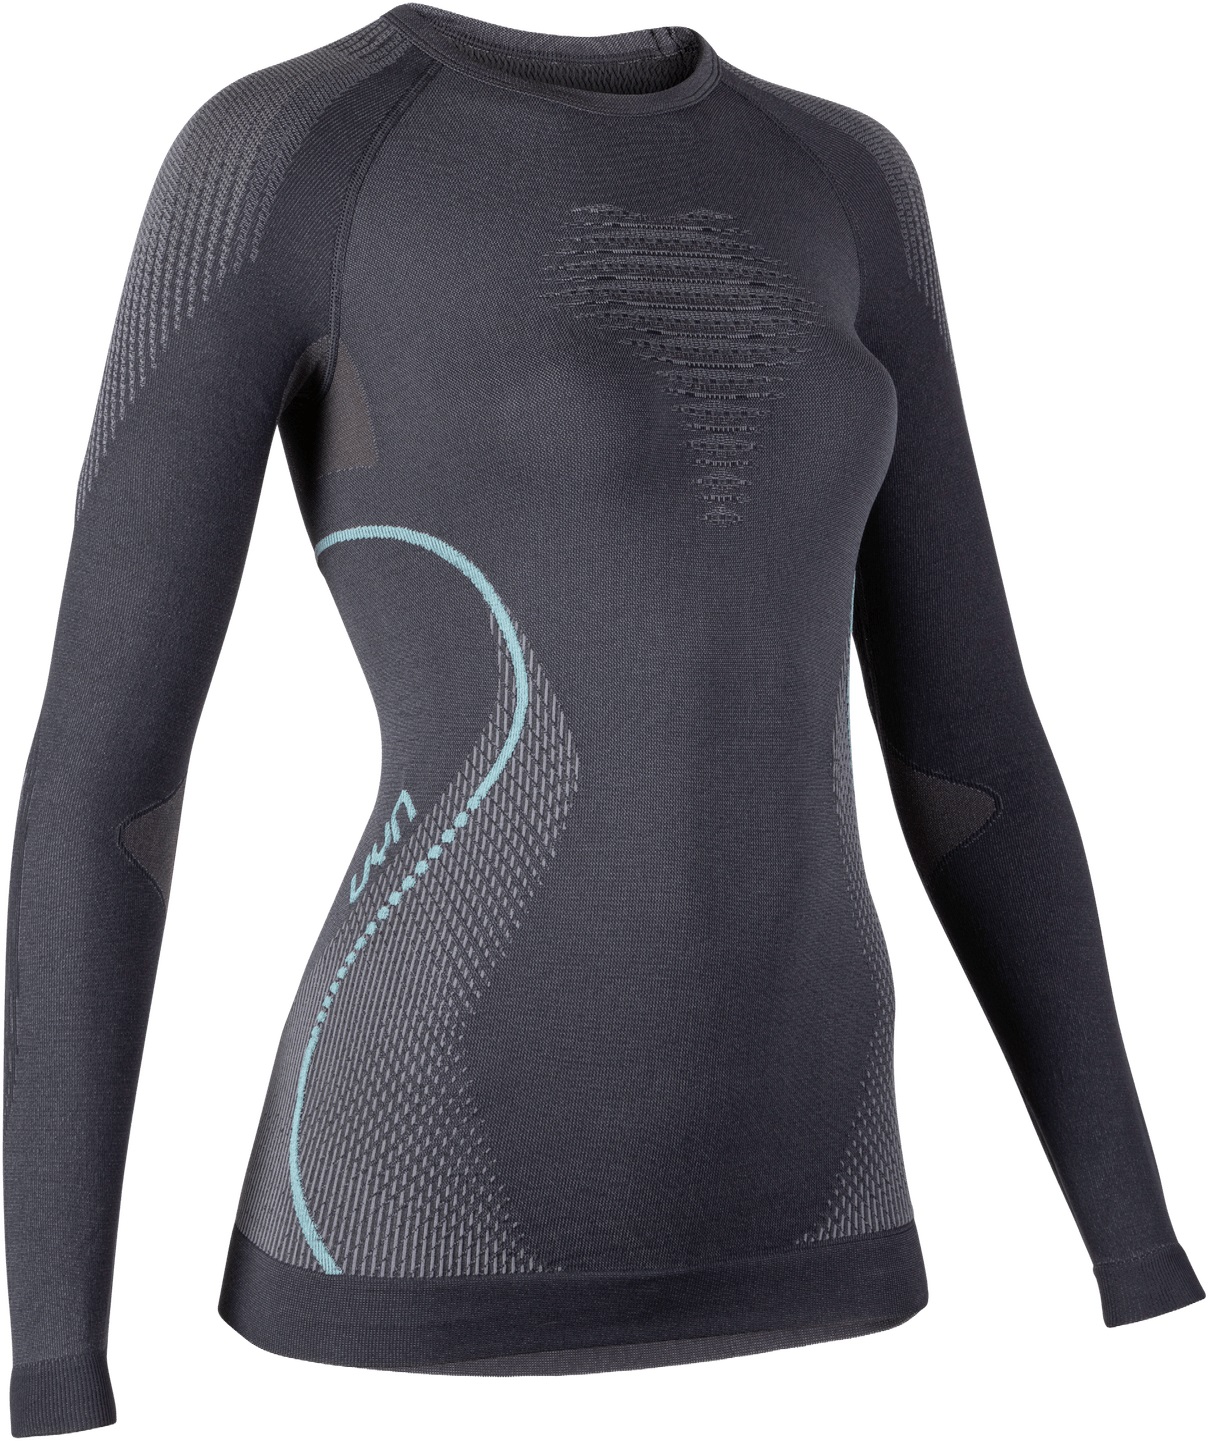 Футболка с длинным рукавом UYN Evolutyon Underwear Shirt Long Sleeves Charcoal/Anthracite/Aqua